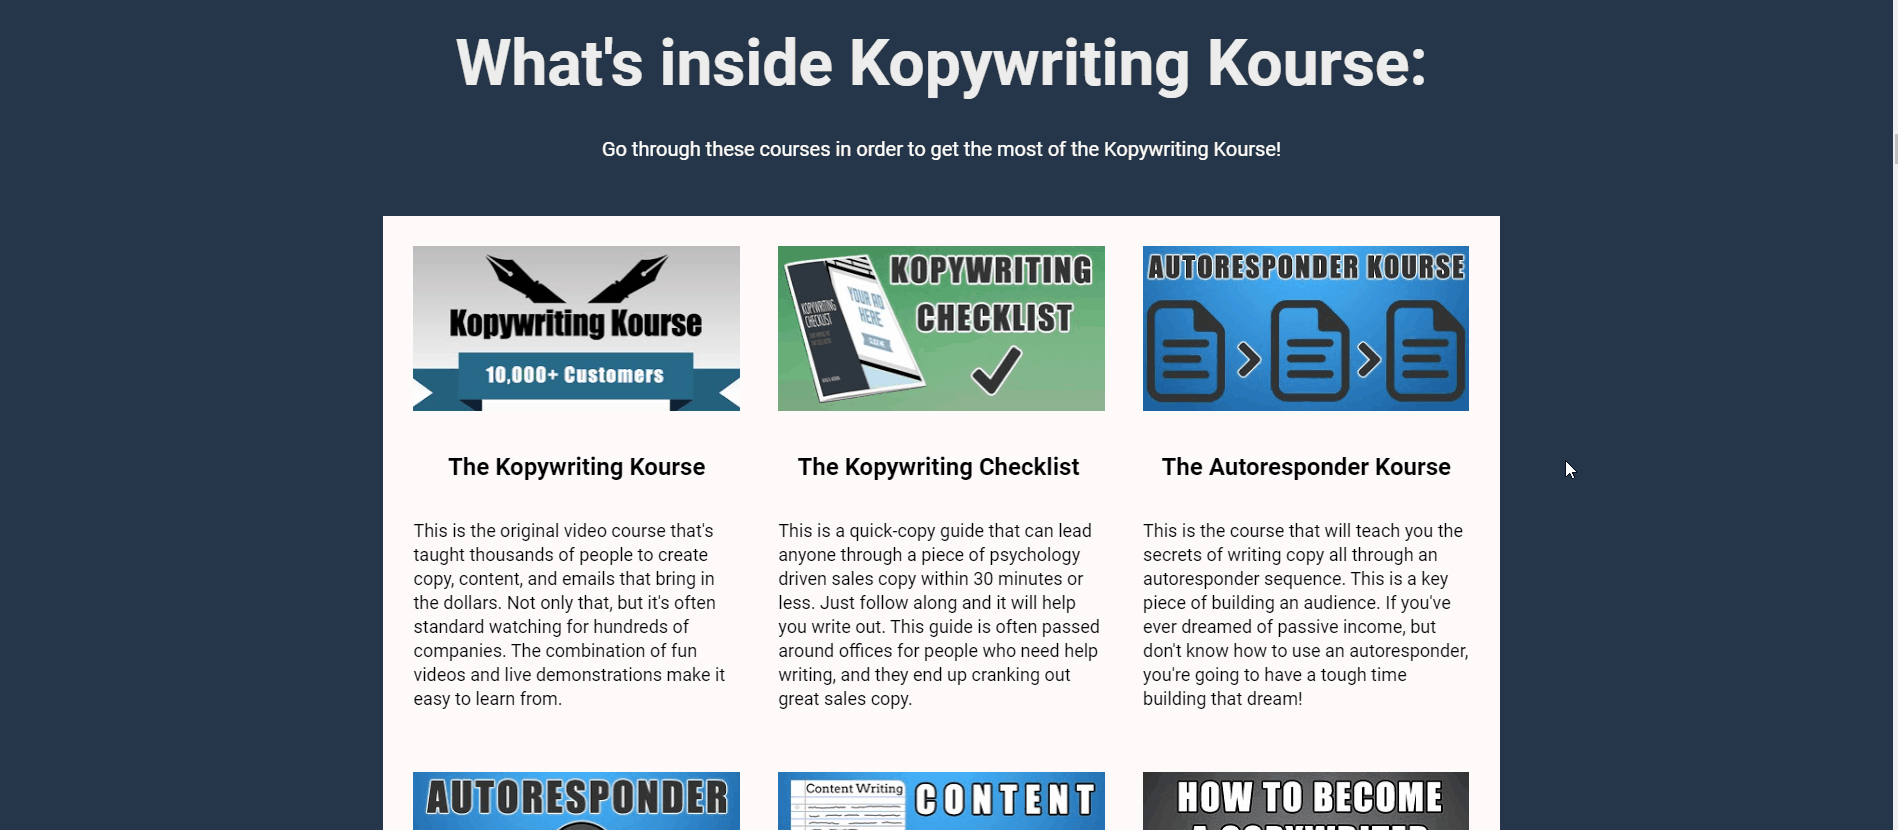 KopywritingKourse courses 1